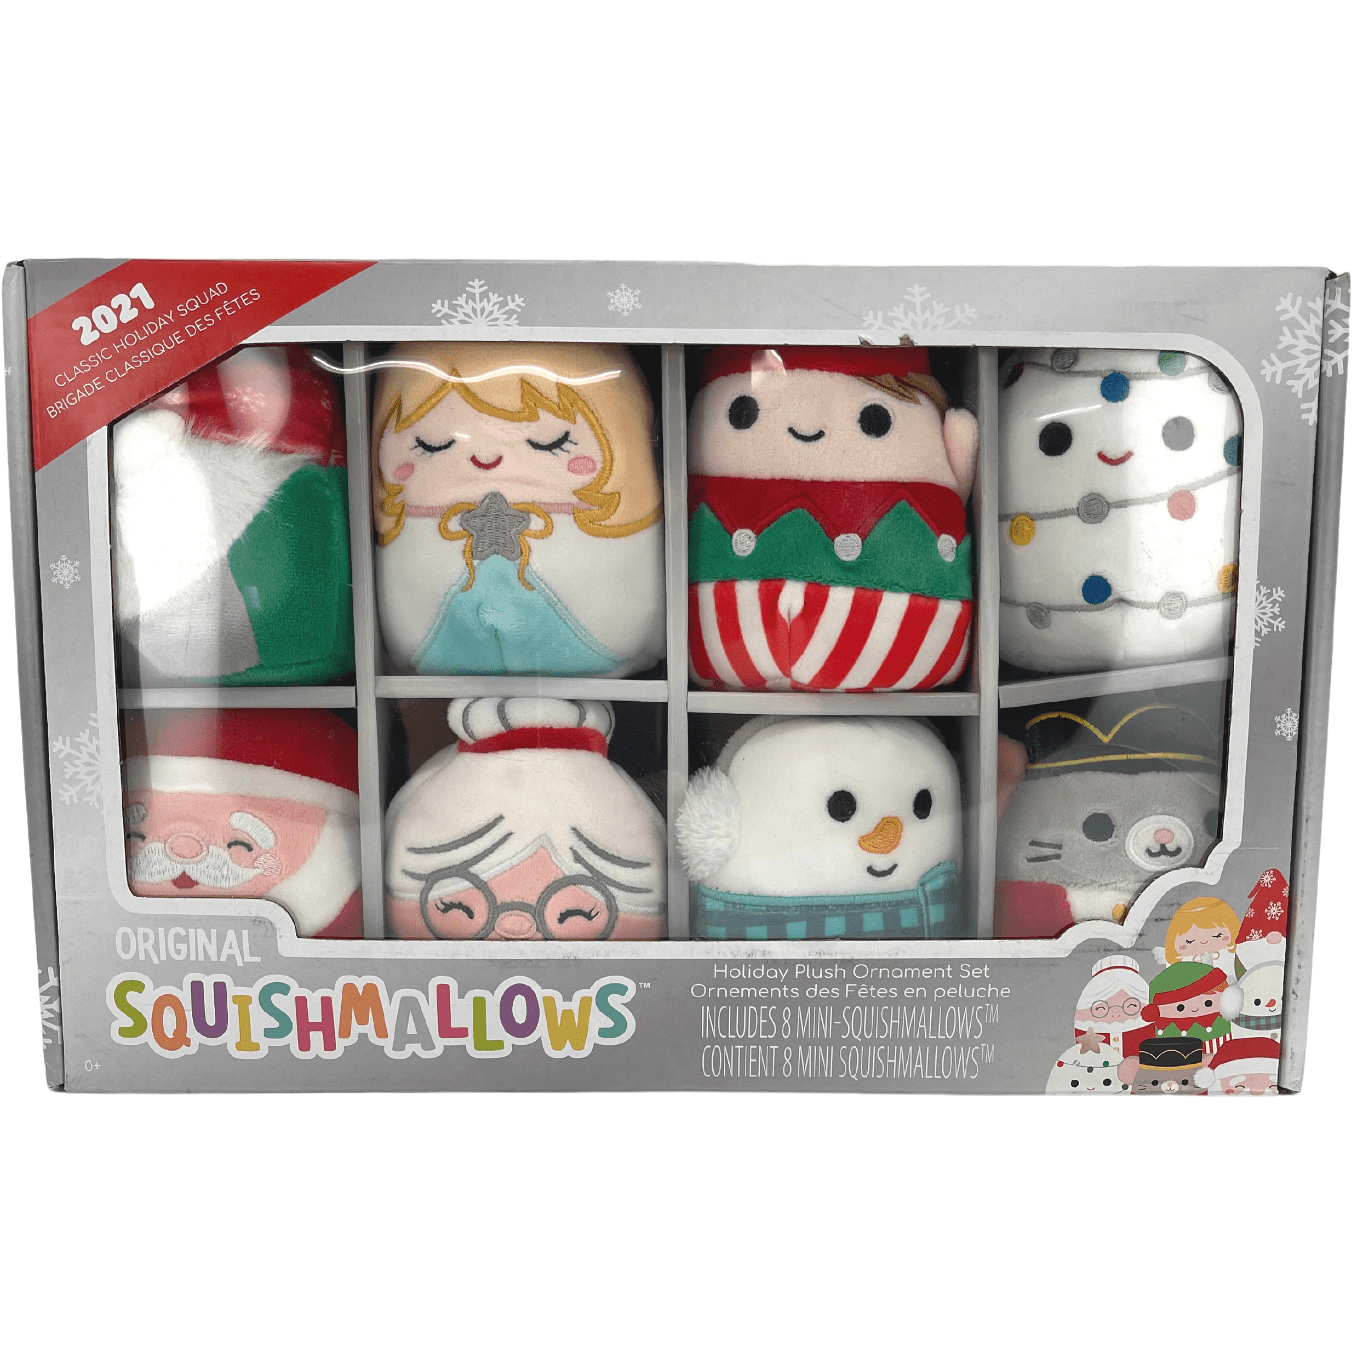 Squishmallows Holiday Plush Ornament Set / 8 Mini Squishmallow / 2021 Classic Holiday Squad